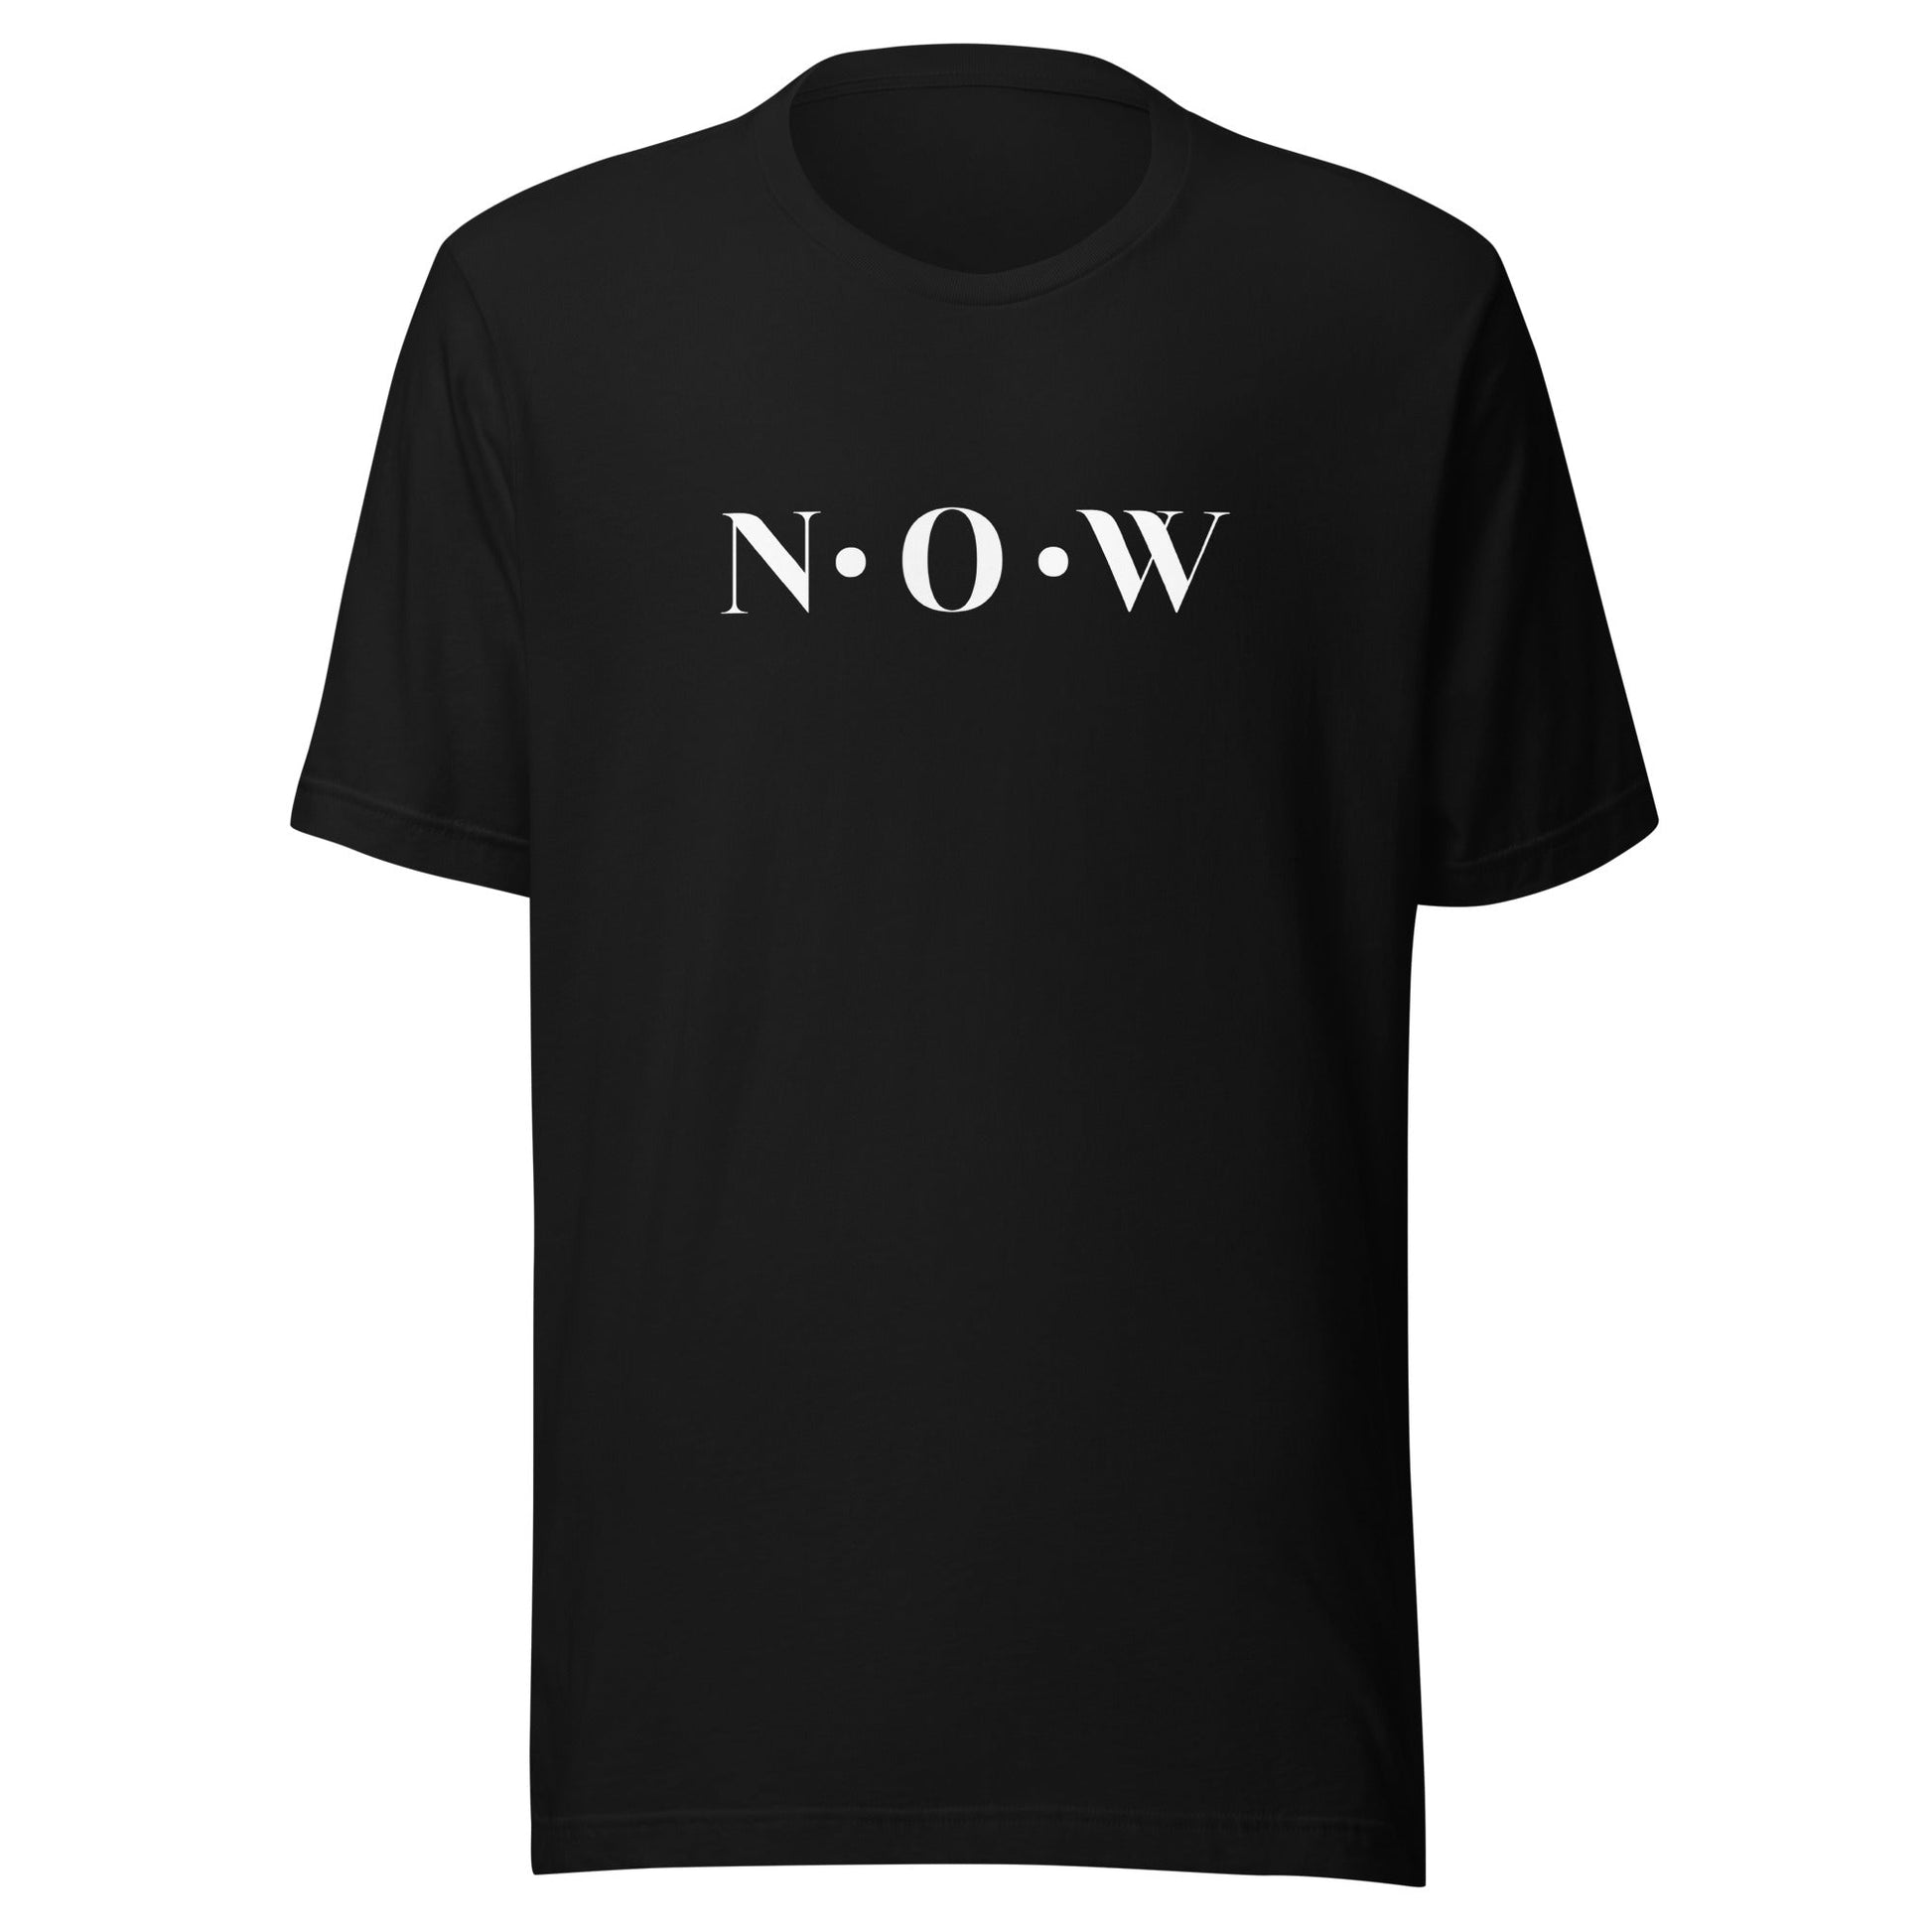 NOW - Unisex t-shirt - lilaloop - T-shirt